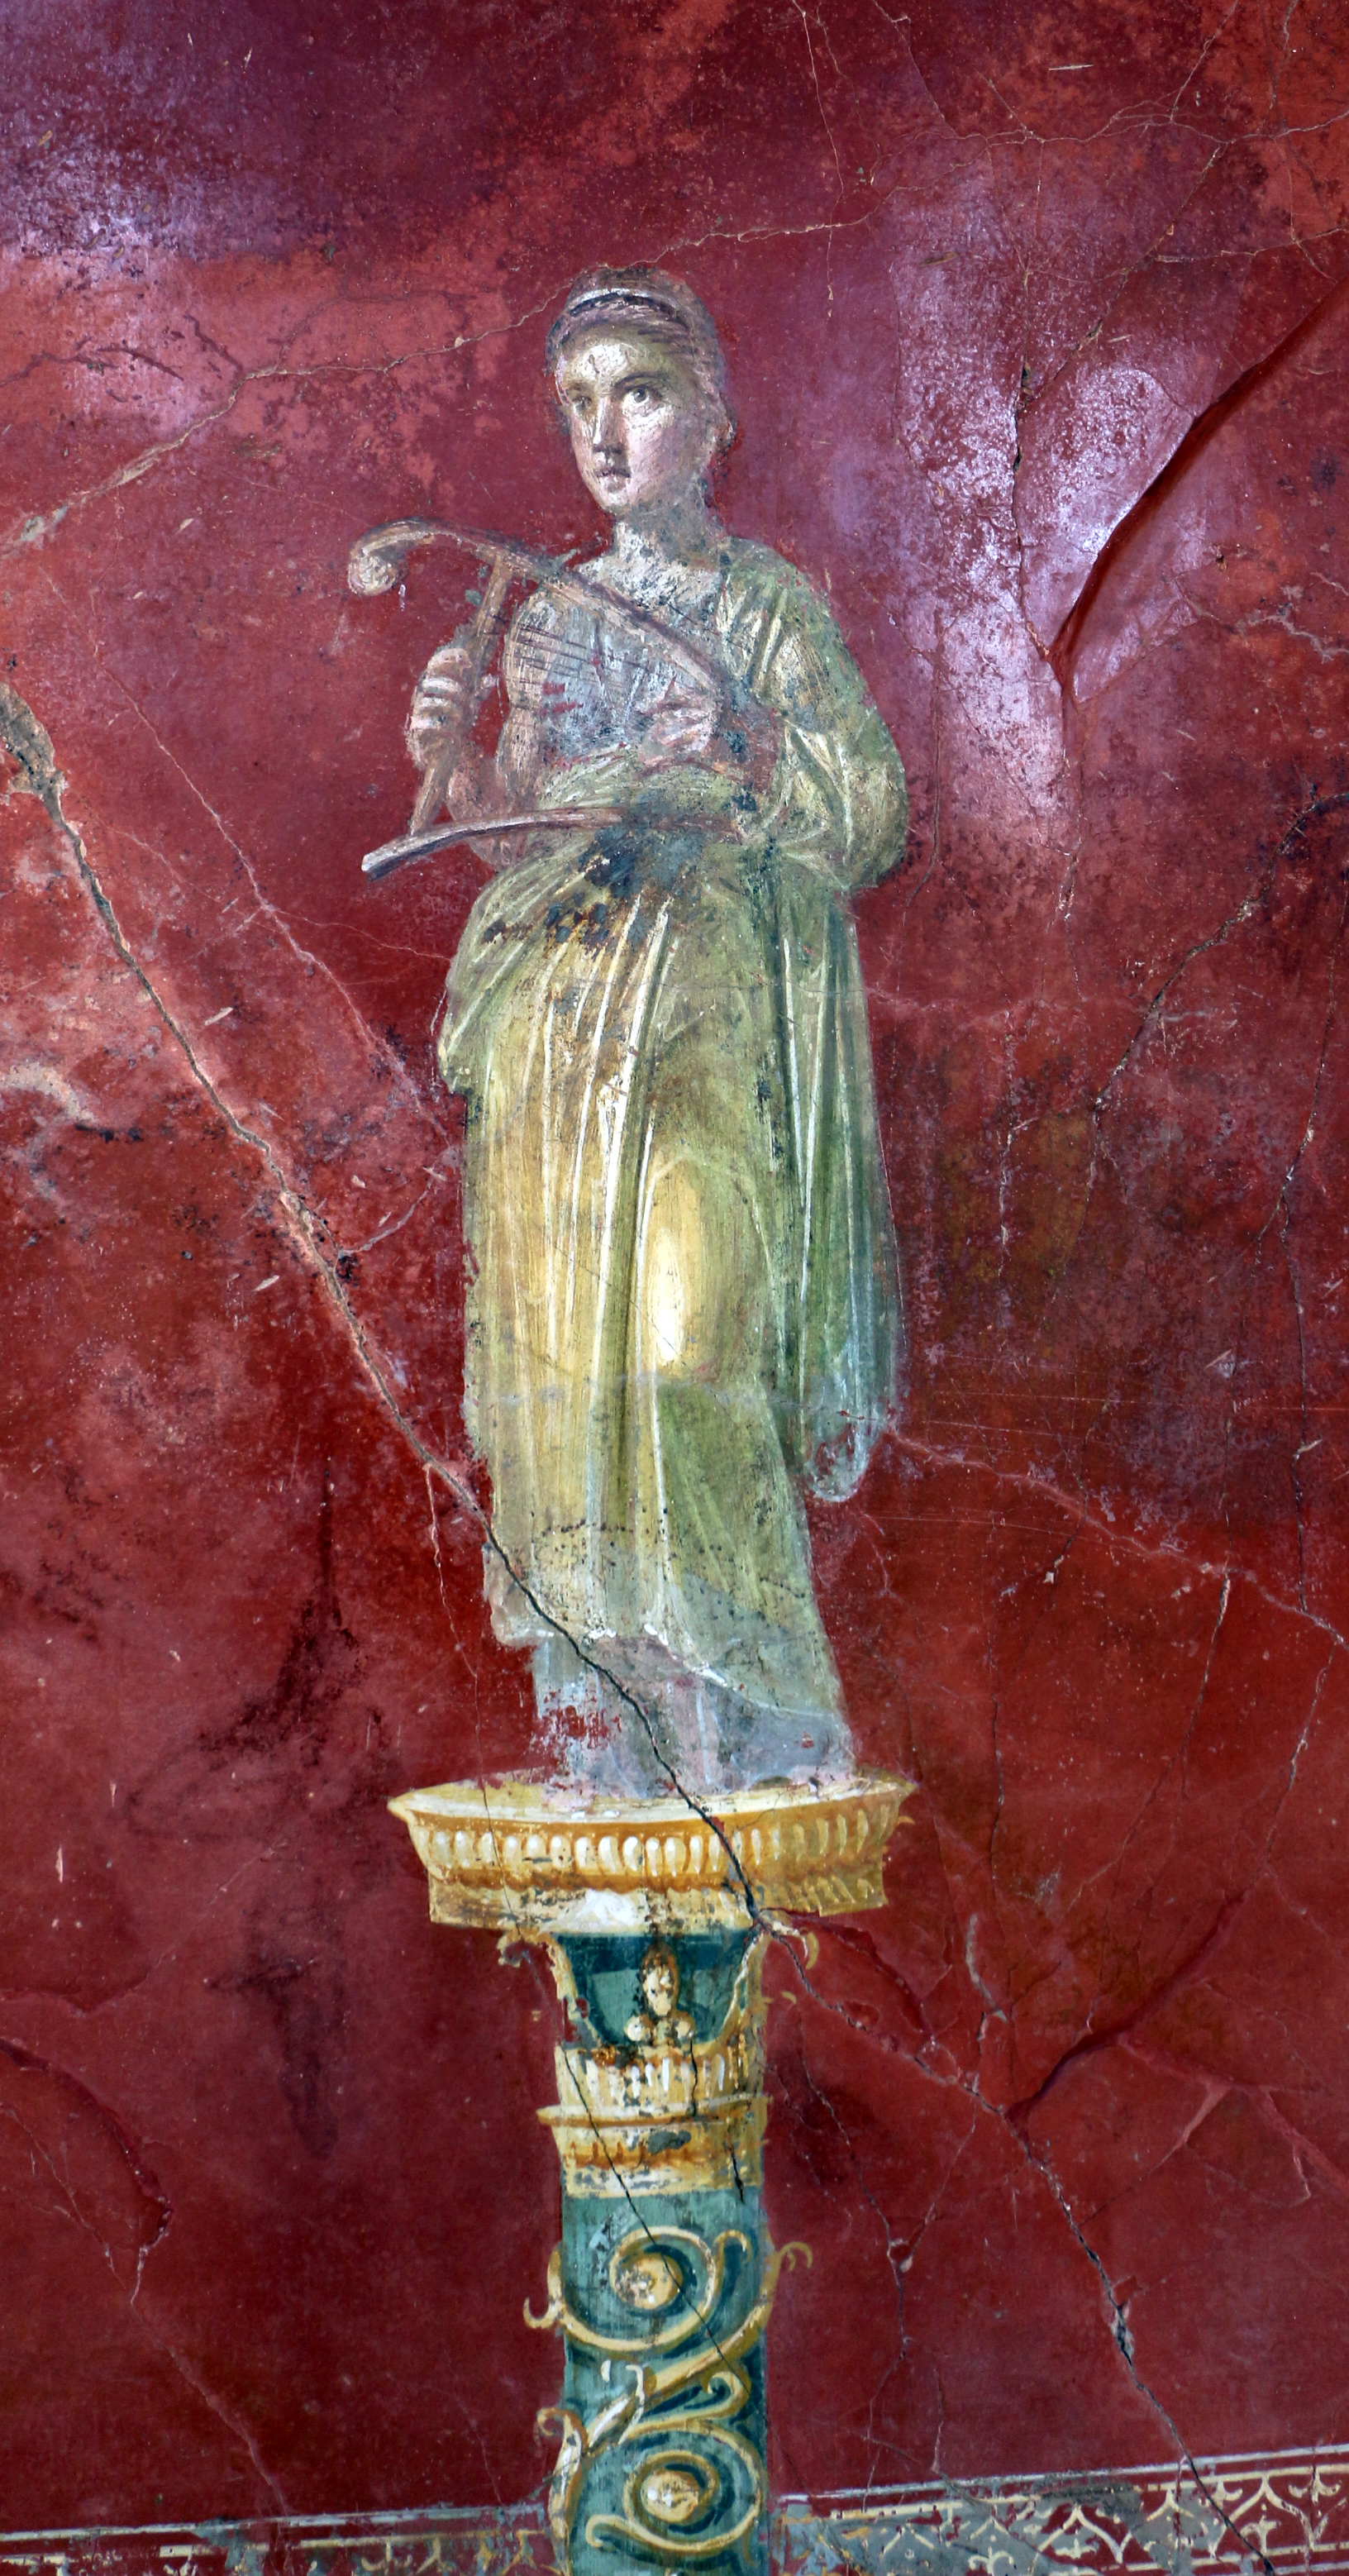 Terpsichore on an antique fresco from Pompeii